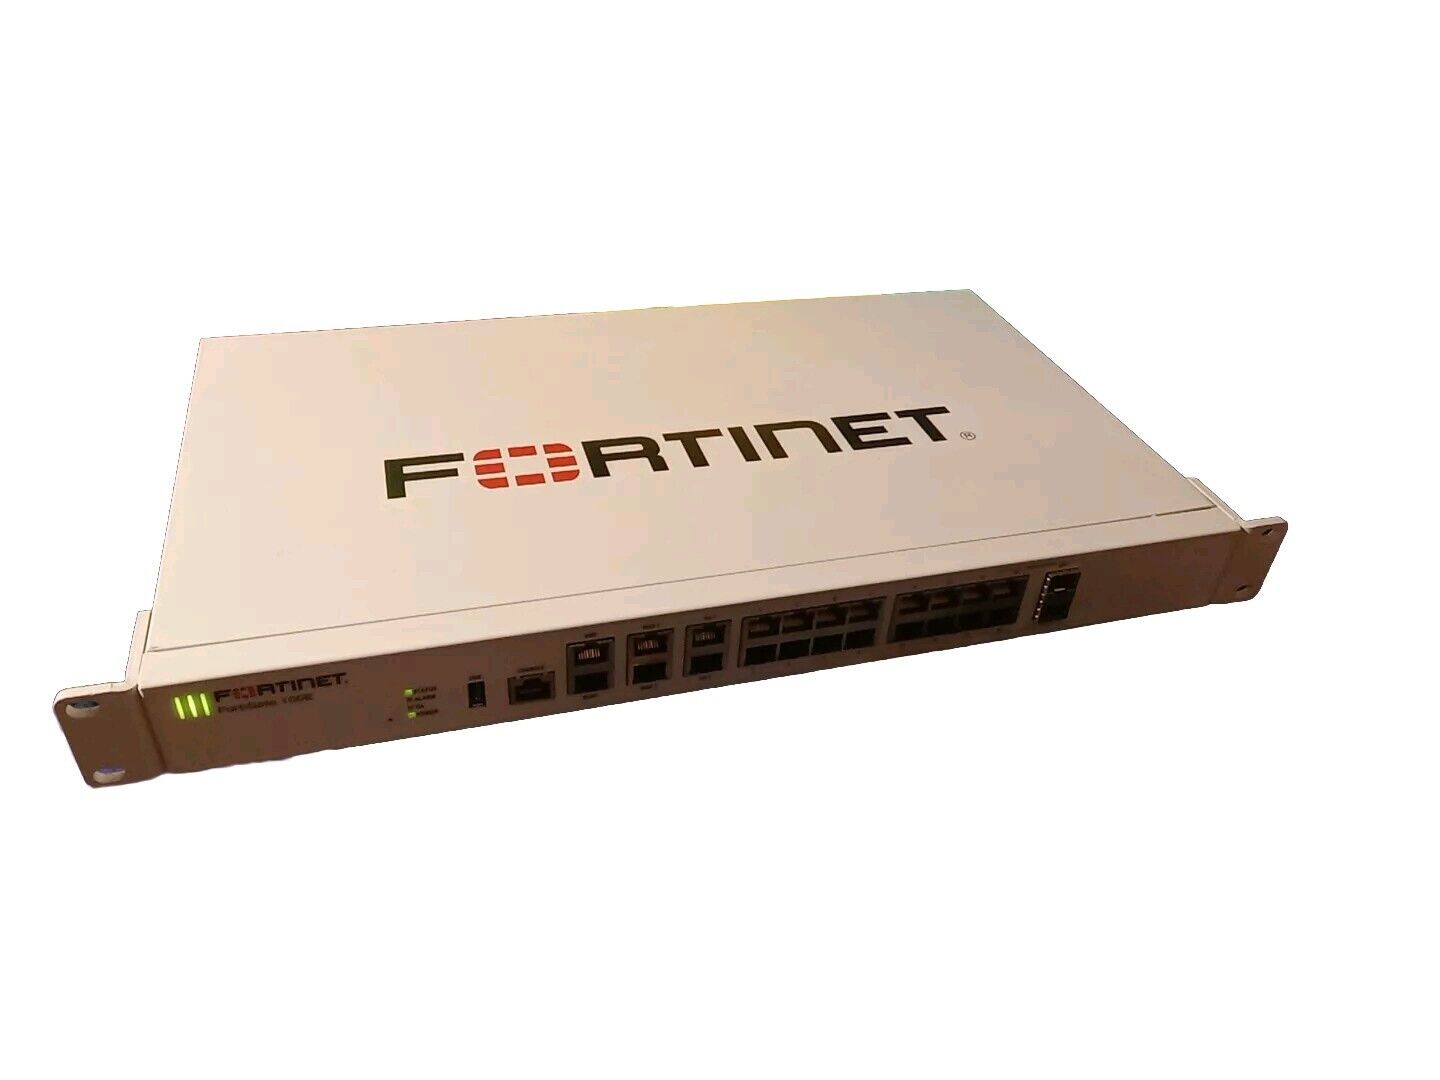 🛜 Fortinet FortiGate 100E  FG-100E) security🔒 Appliance 🔥 Firewall 🔥🆓️SHP📦